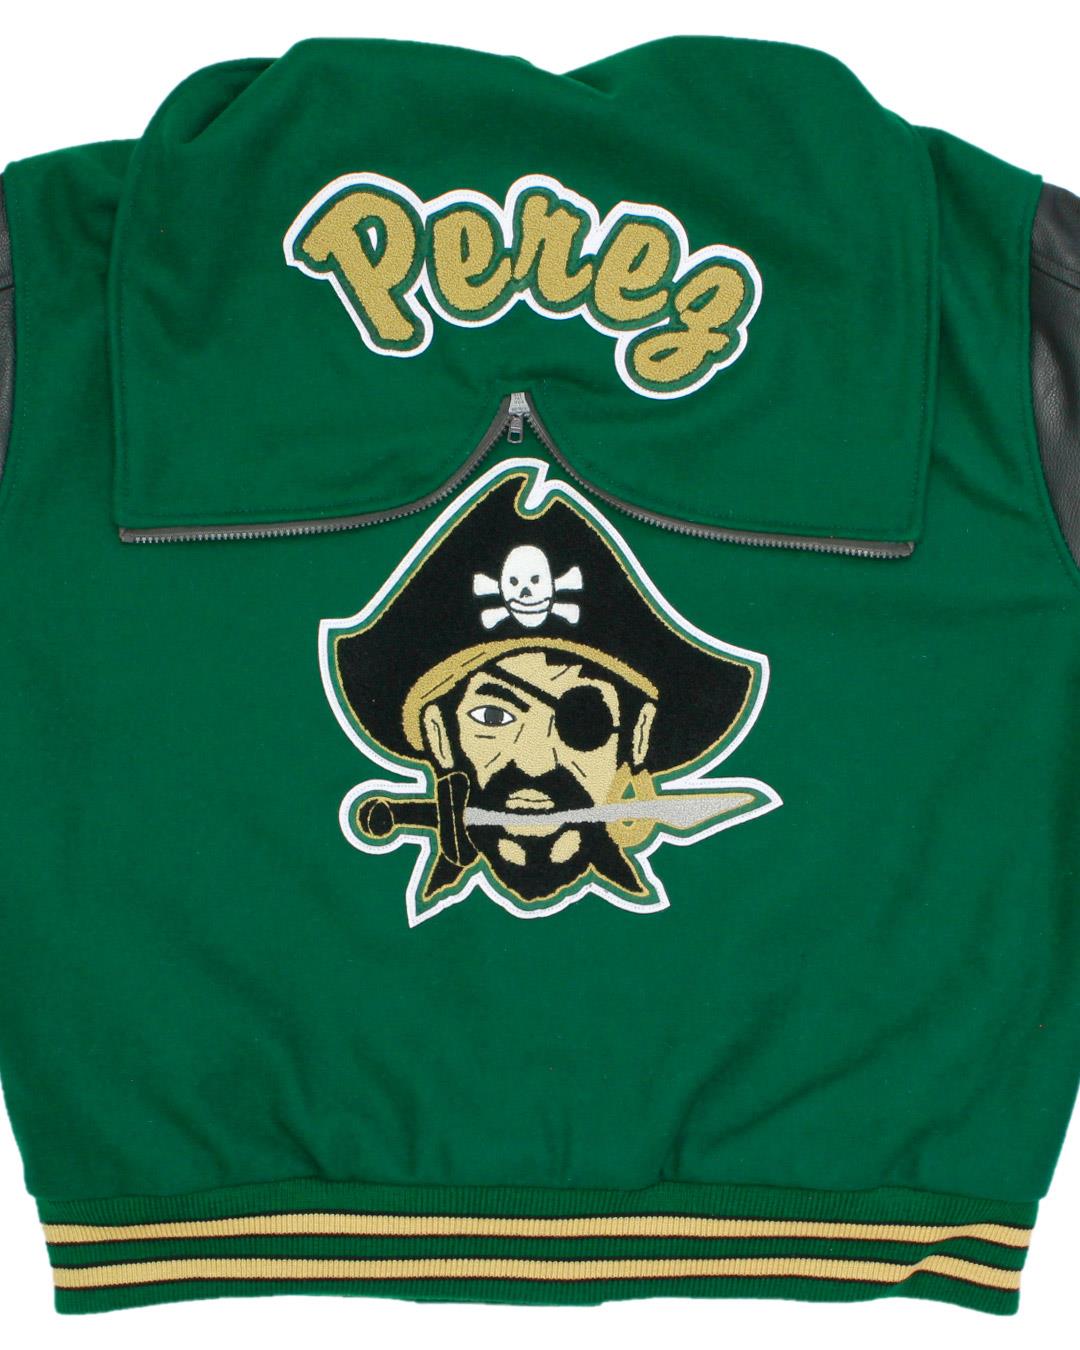 Monte Vista High School Pirates Varsity Jacket, Monte Vista, CO - Back